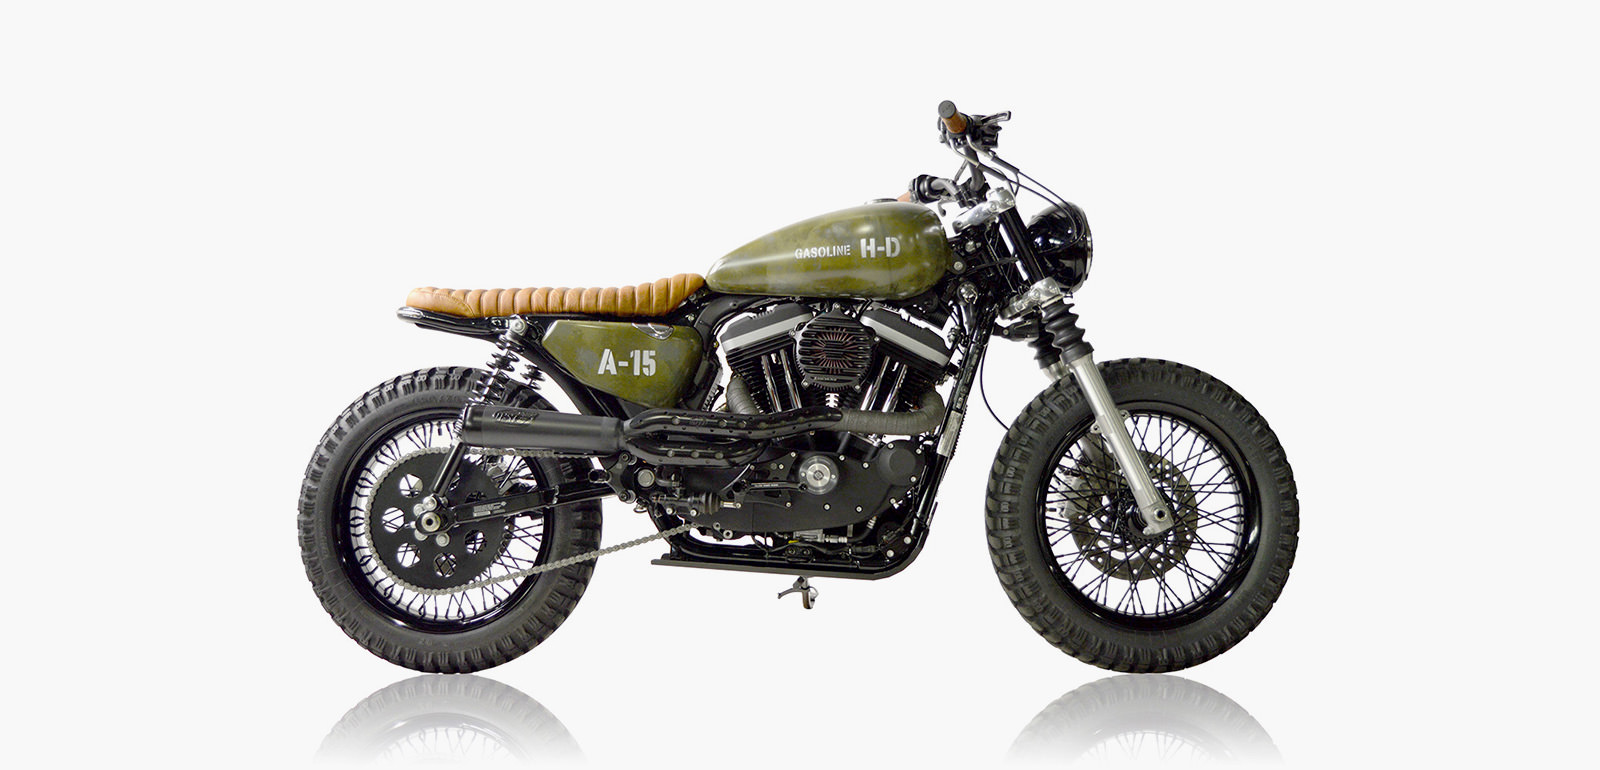 Gasoline Motor Co. Harley-Davidson Scrambler 'A-15'